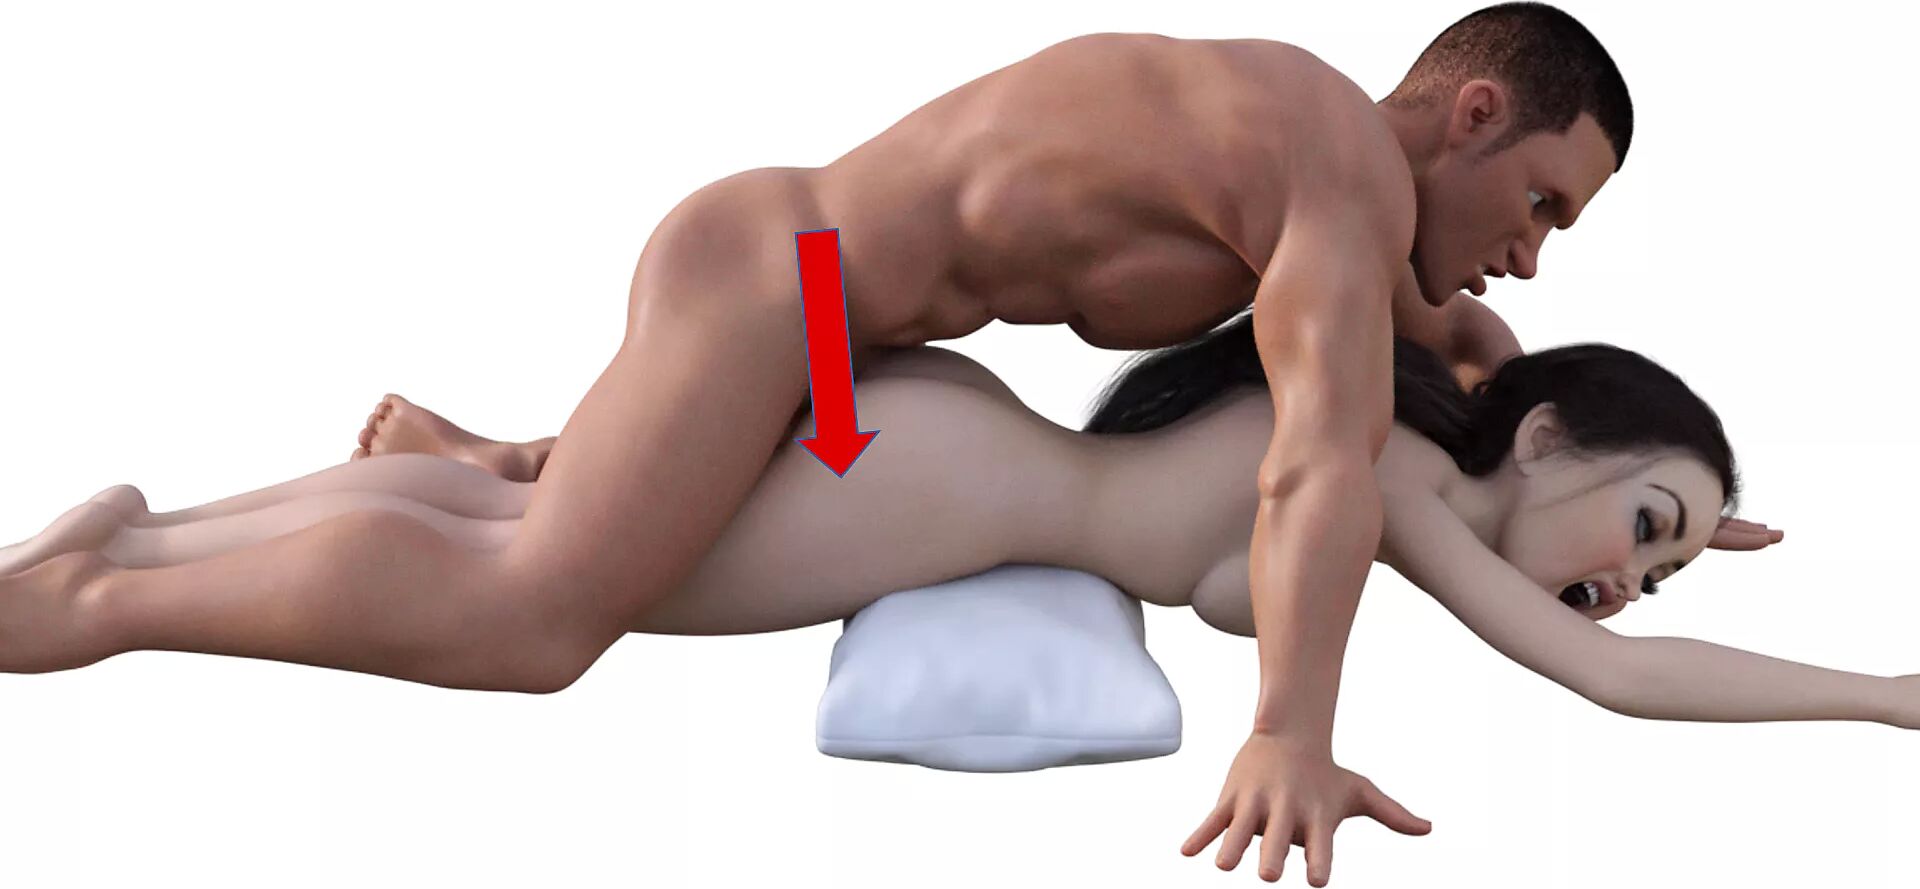 Sex position video